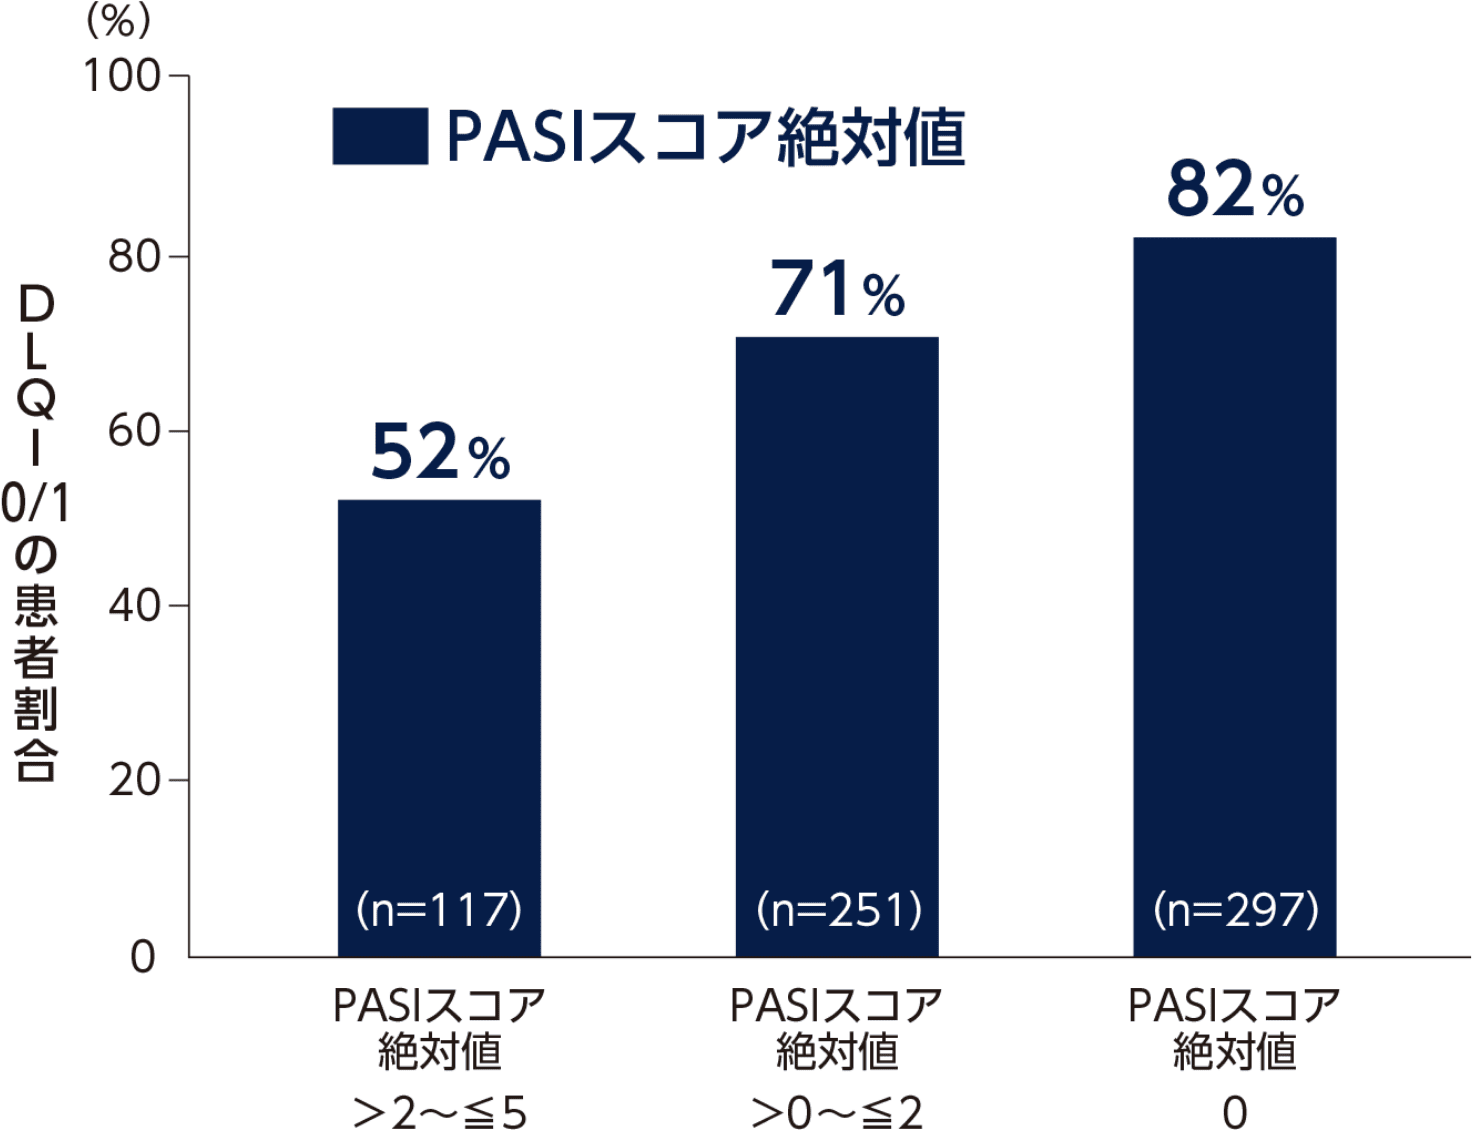 PASIスコア絶対値とDLQI 0/1達成率の相関を示すグラフ。PASIスコア絶対値が2以上5以下の時、DLQI 0/1の患者割合は117例において52%。PASIスコア絶対値が2以下の時、DLQI 0/1の患者割合は251例において71%。PASIスコア絶対値が0の時、DLQI 0/1の患者割合は297例において82%。